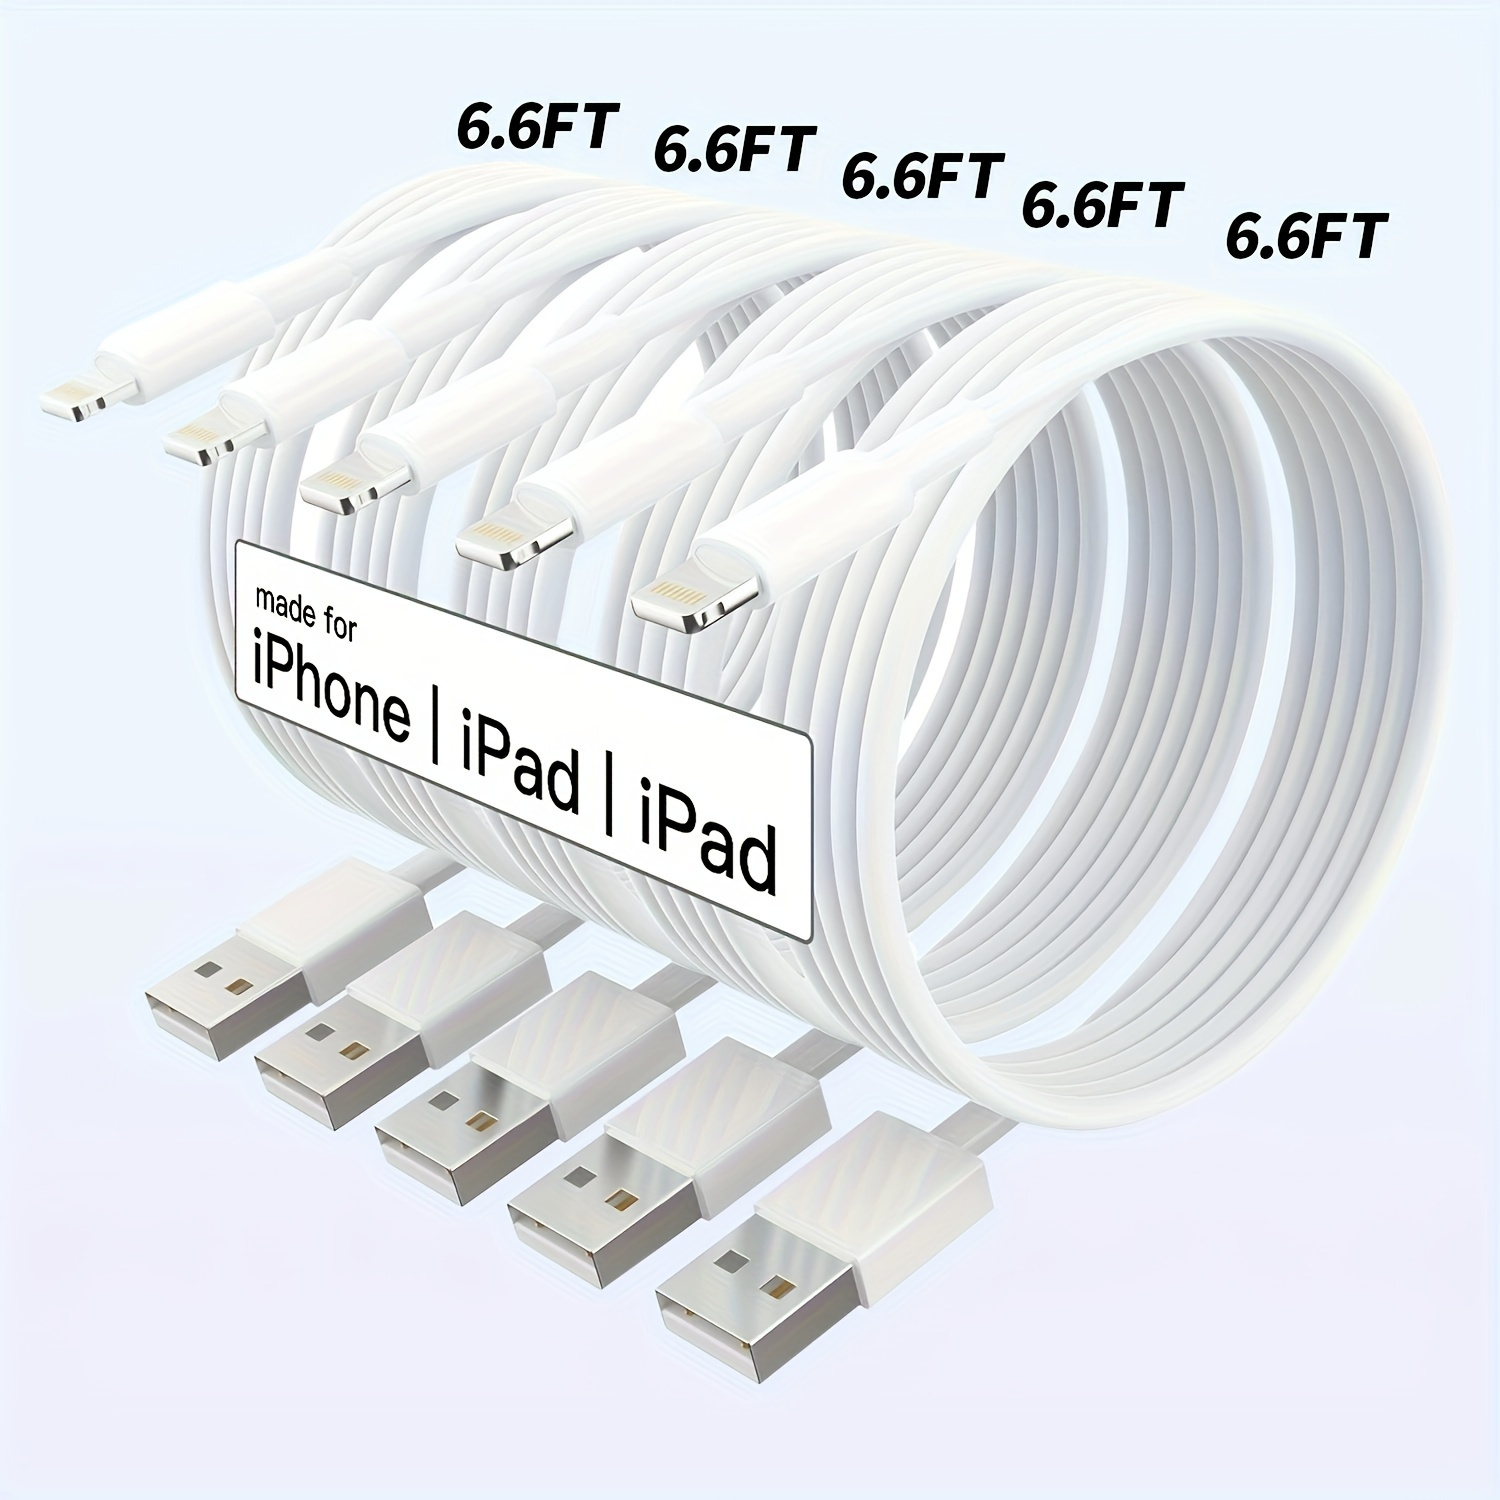  Apple Lightning Cable, cargador rápido certificado por MFI para  iPhone & iPad, cable de carga para iPhone Xs/XS Max, XR, X, 8/8Plus,  7/7Plus, 6/6Plus, iPad Pro/Air 2, iPad Mini 4/3/2, iPod